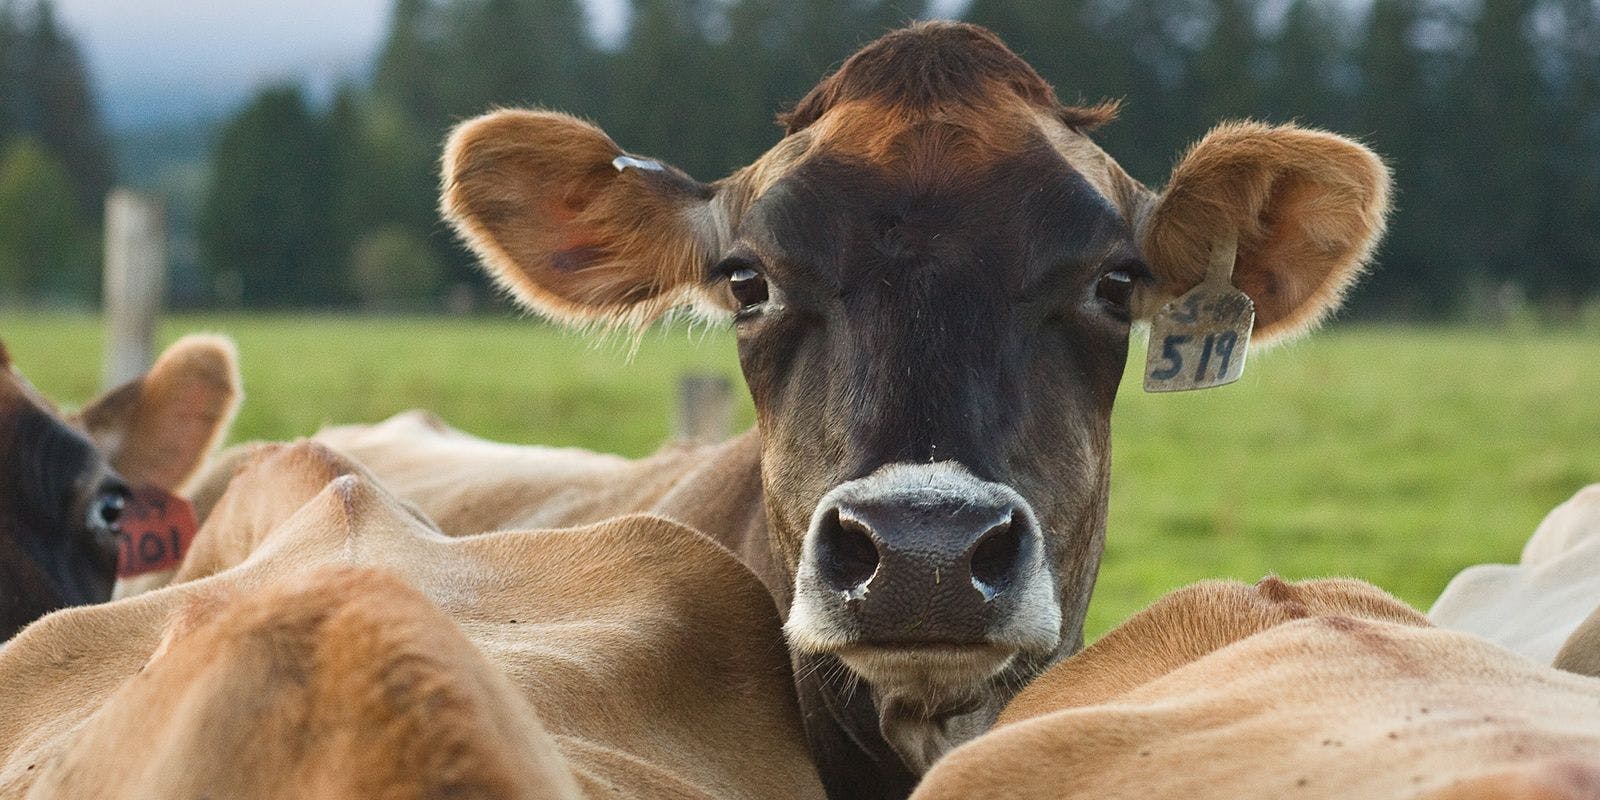 A brown cow is shown at the Pearson farm in Washington.